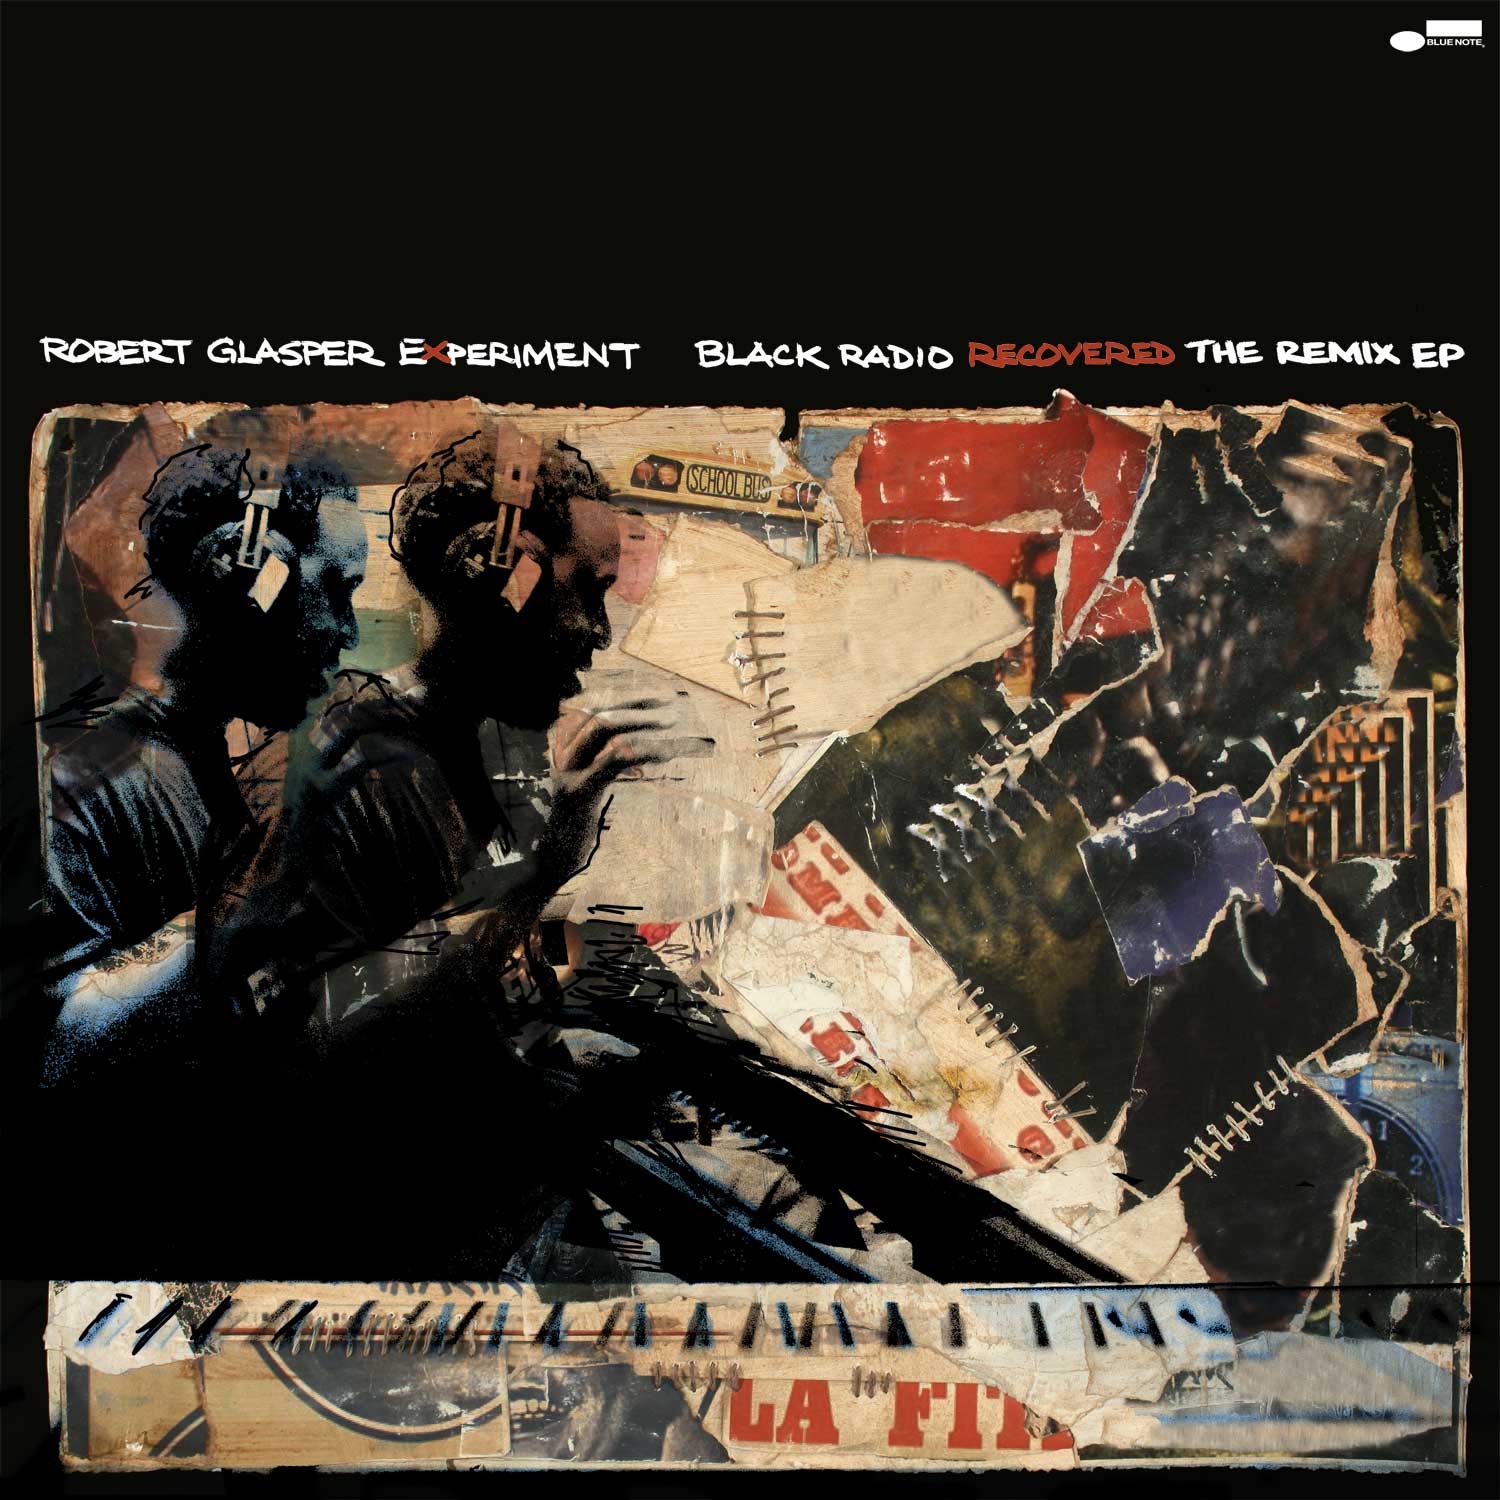 Robert Glasper Experiment  - "Afro Blue" ft. Erykah Badu & Phonte (9th Wonder Remix)